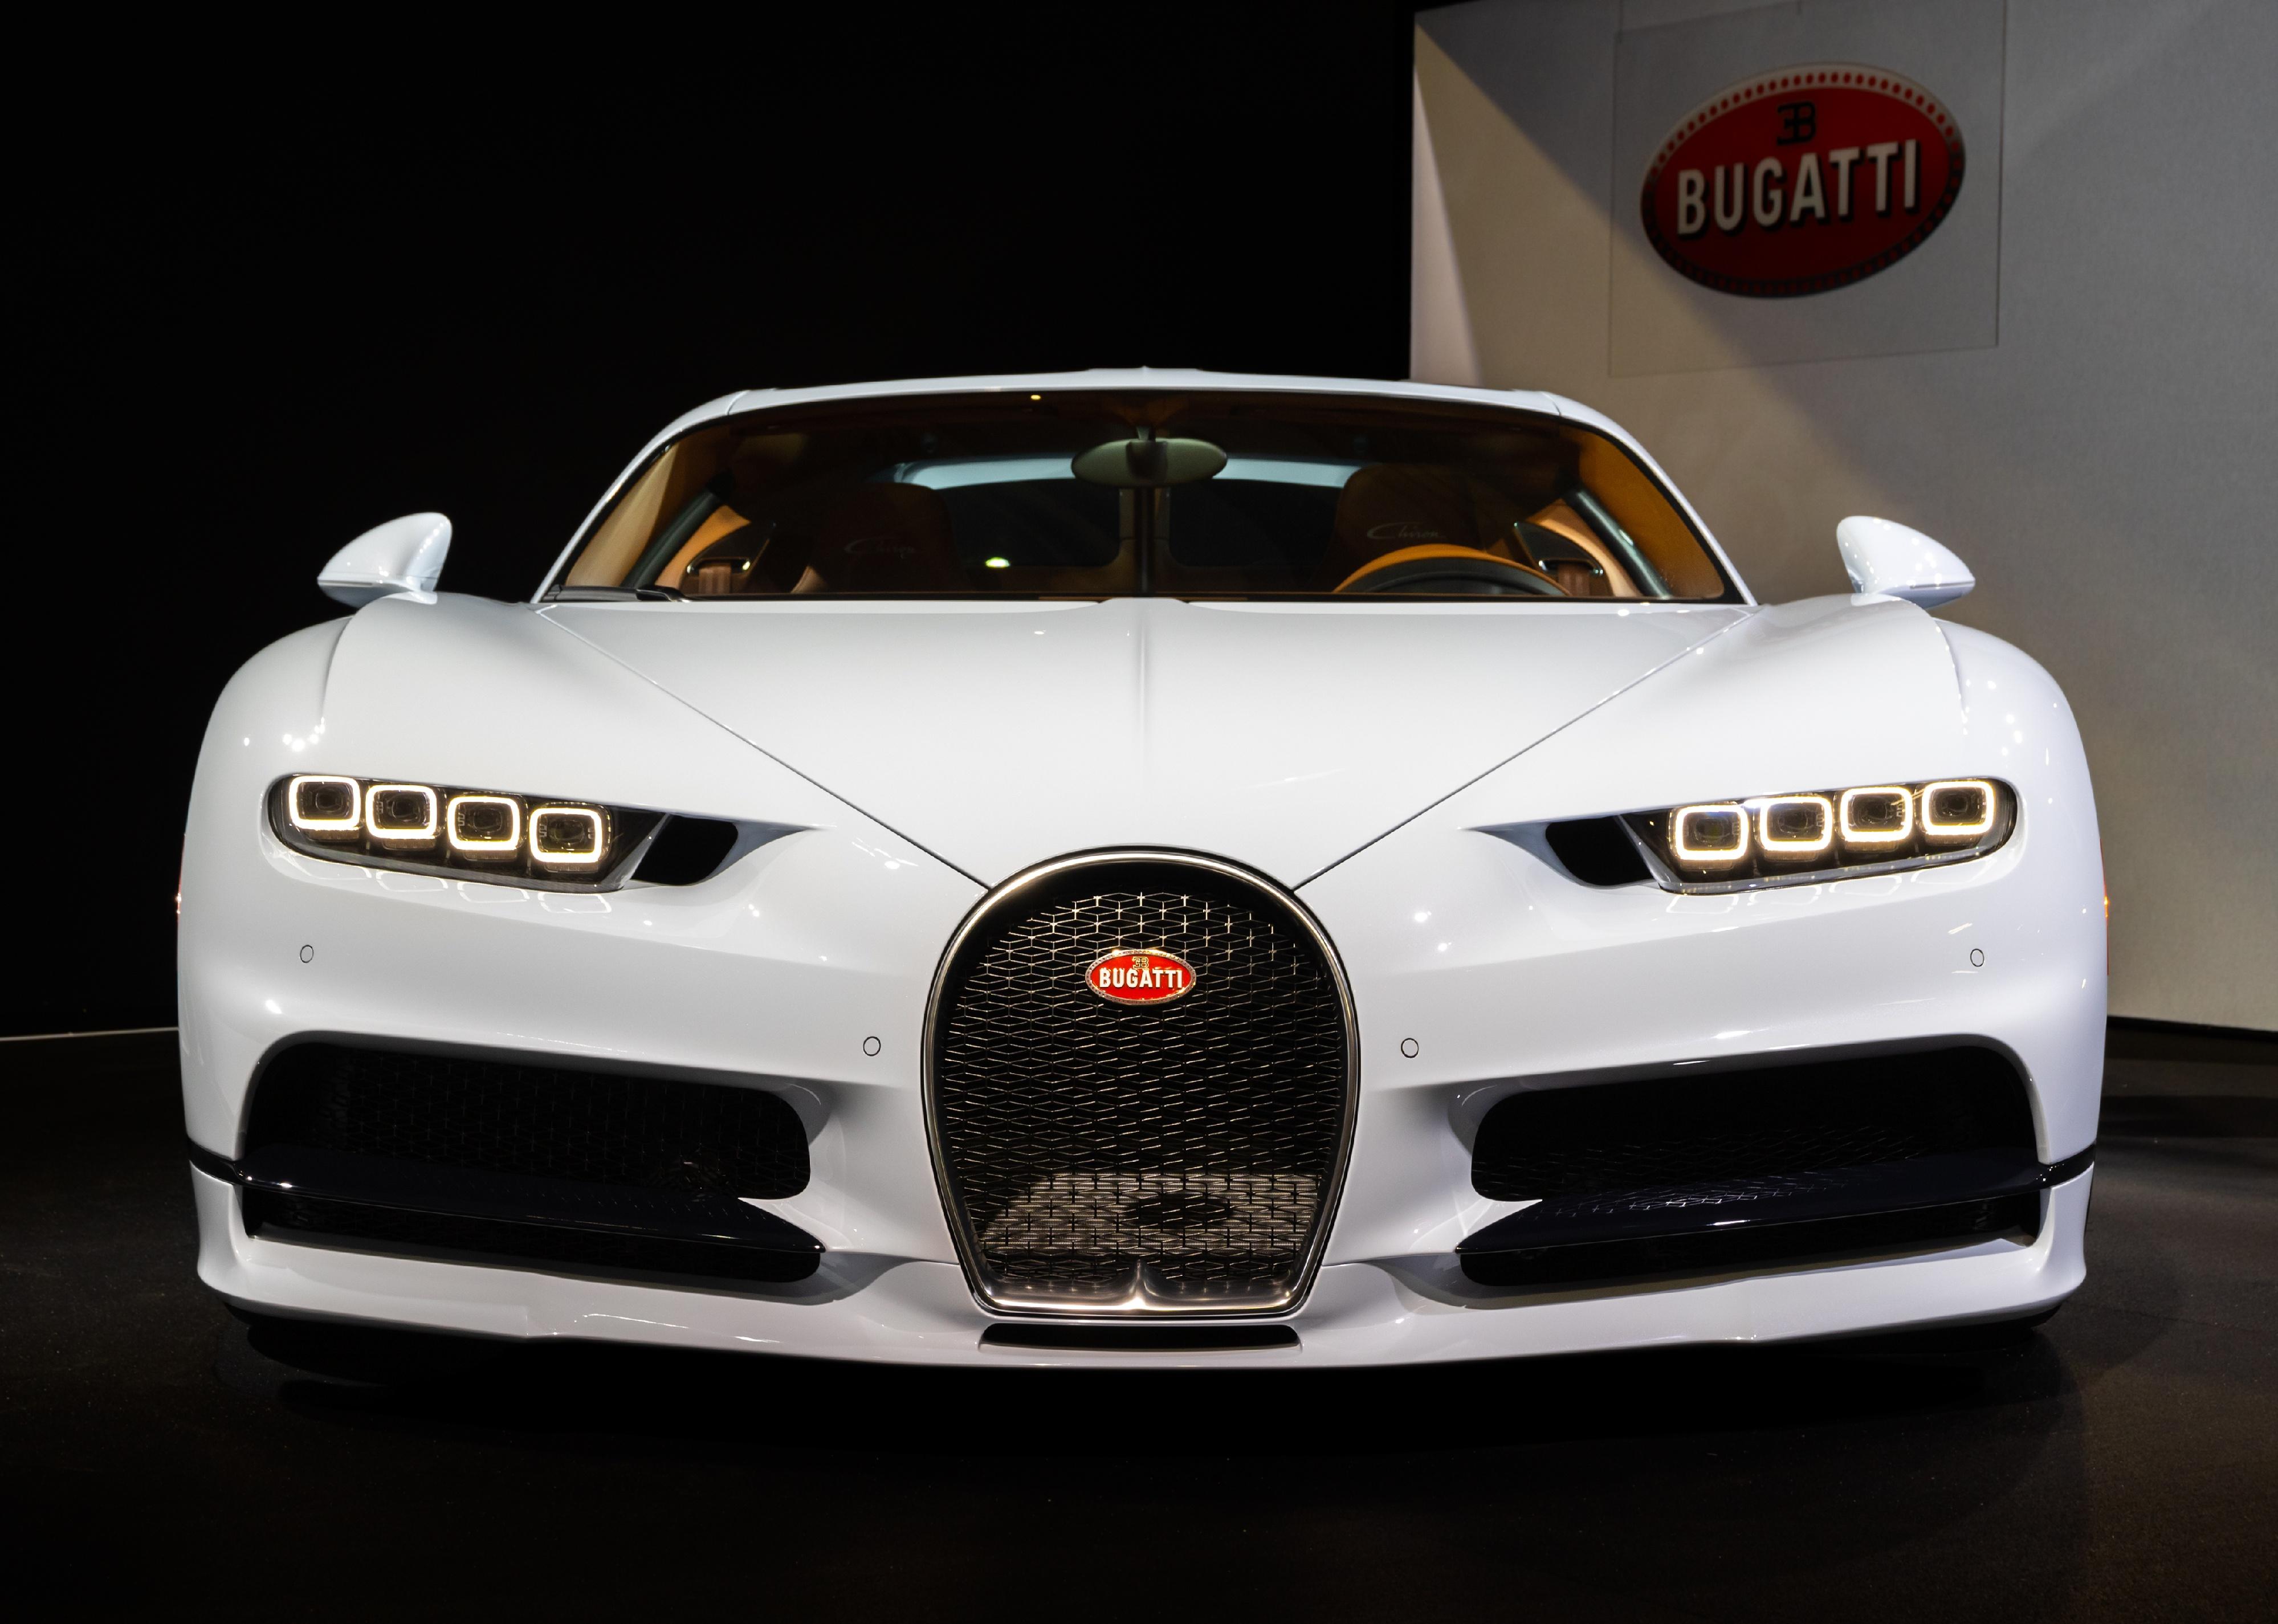 Bugatti Chiron 8.0 W16 DSG Sequential sports car showcased at the Paris Motor Show.